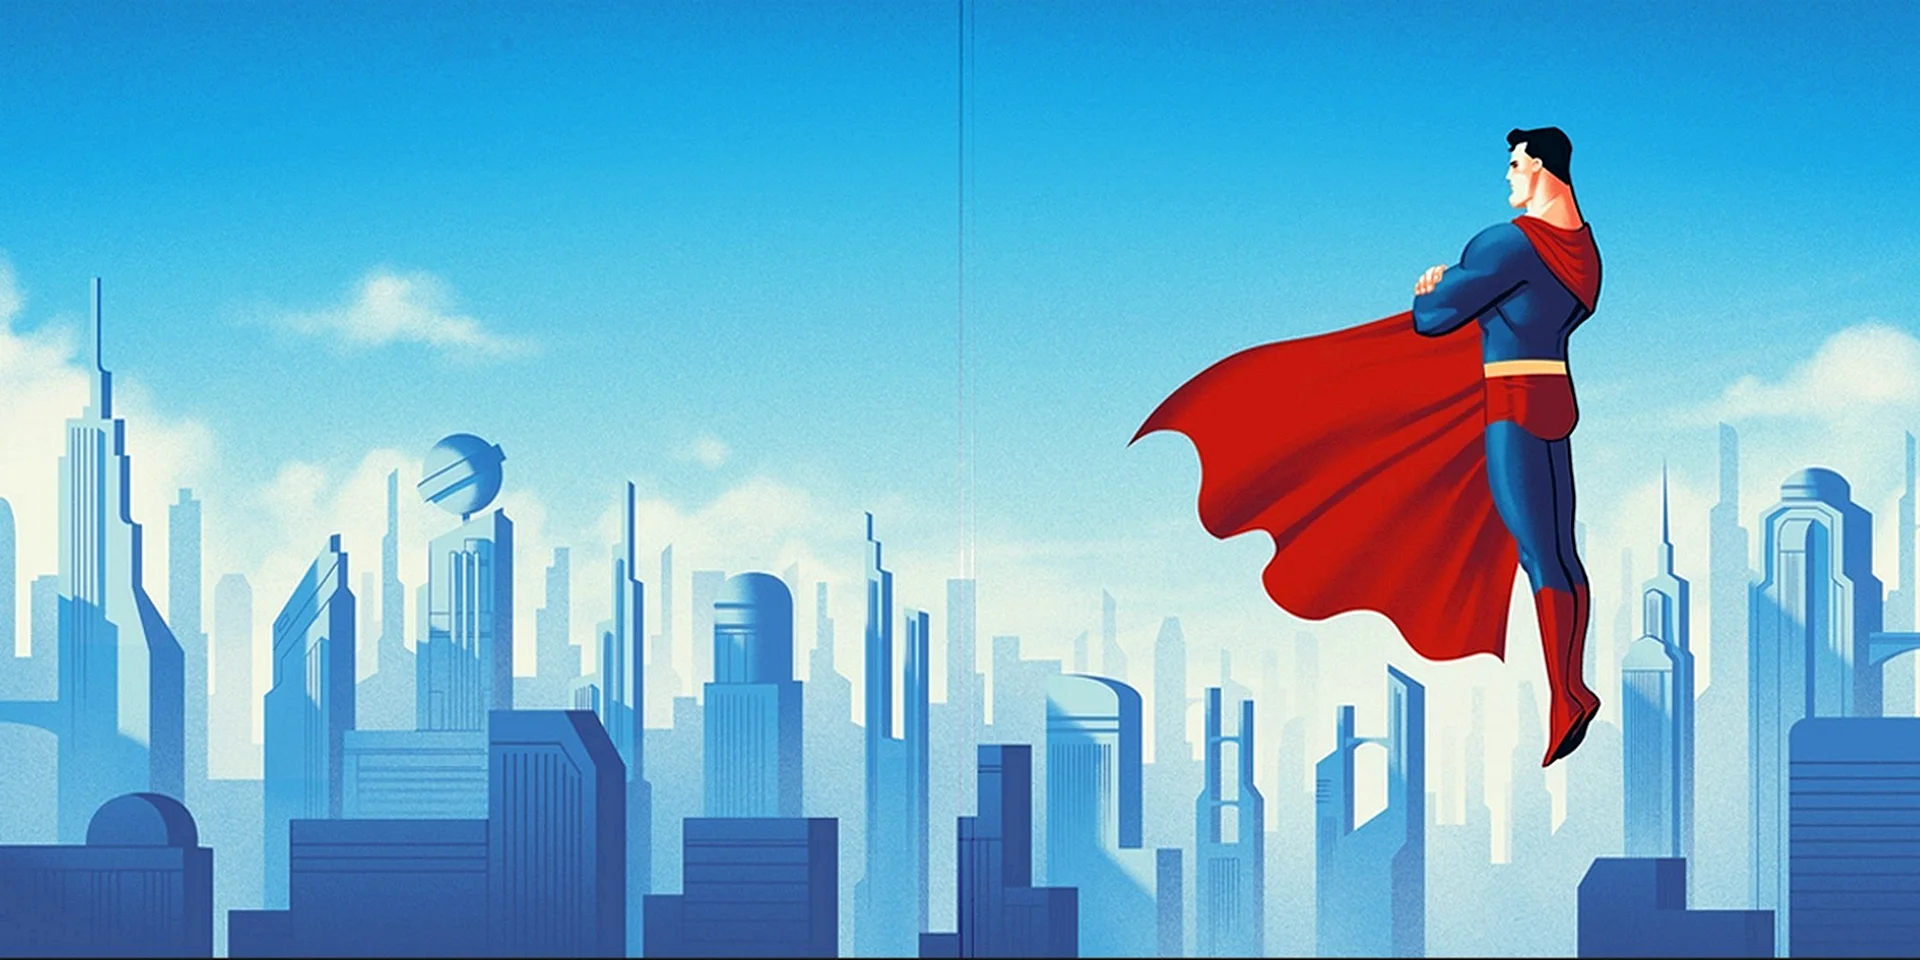 Superhero has. Супергерои. Супермен. Супермен на фоне города. Город Супермена.